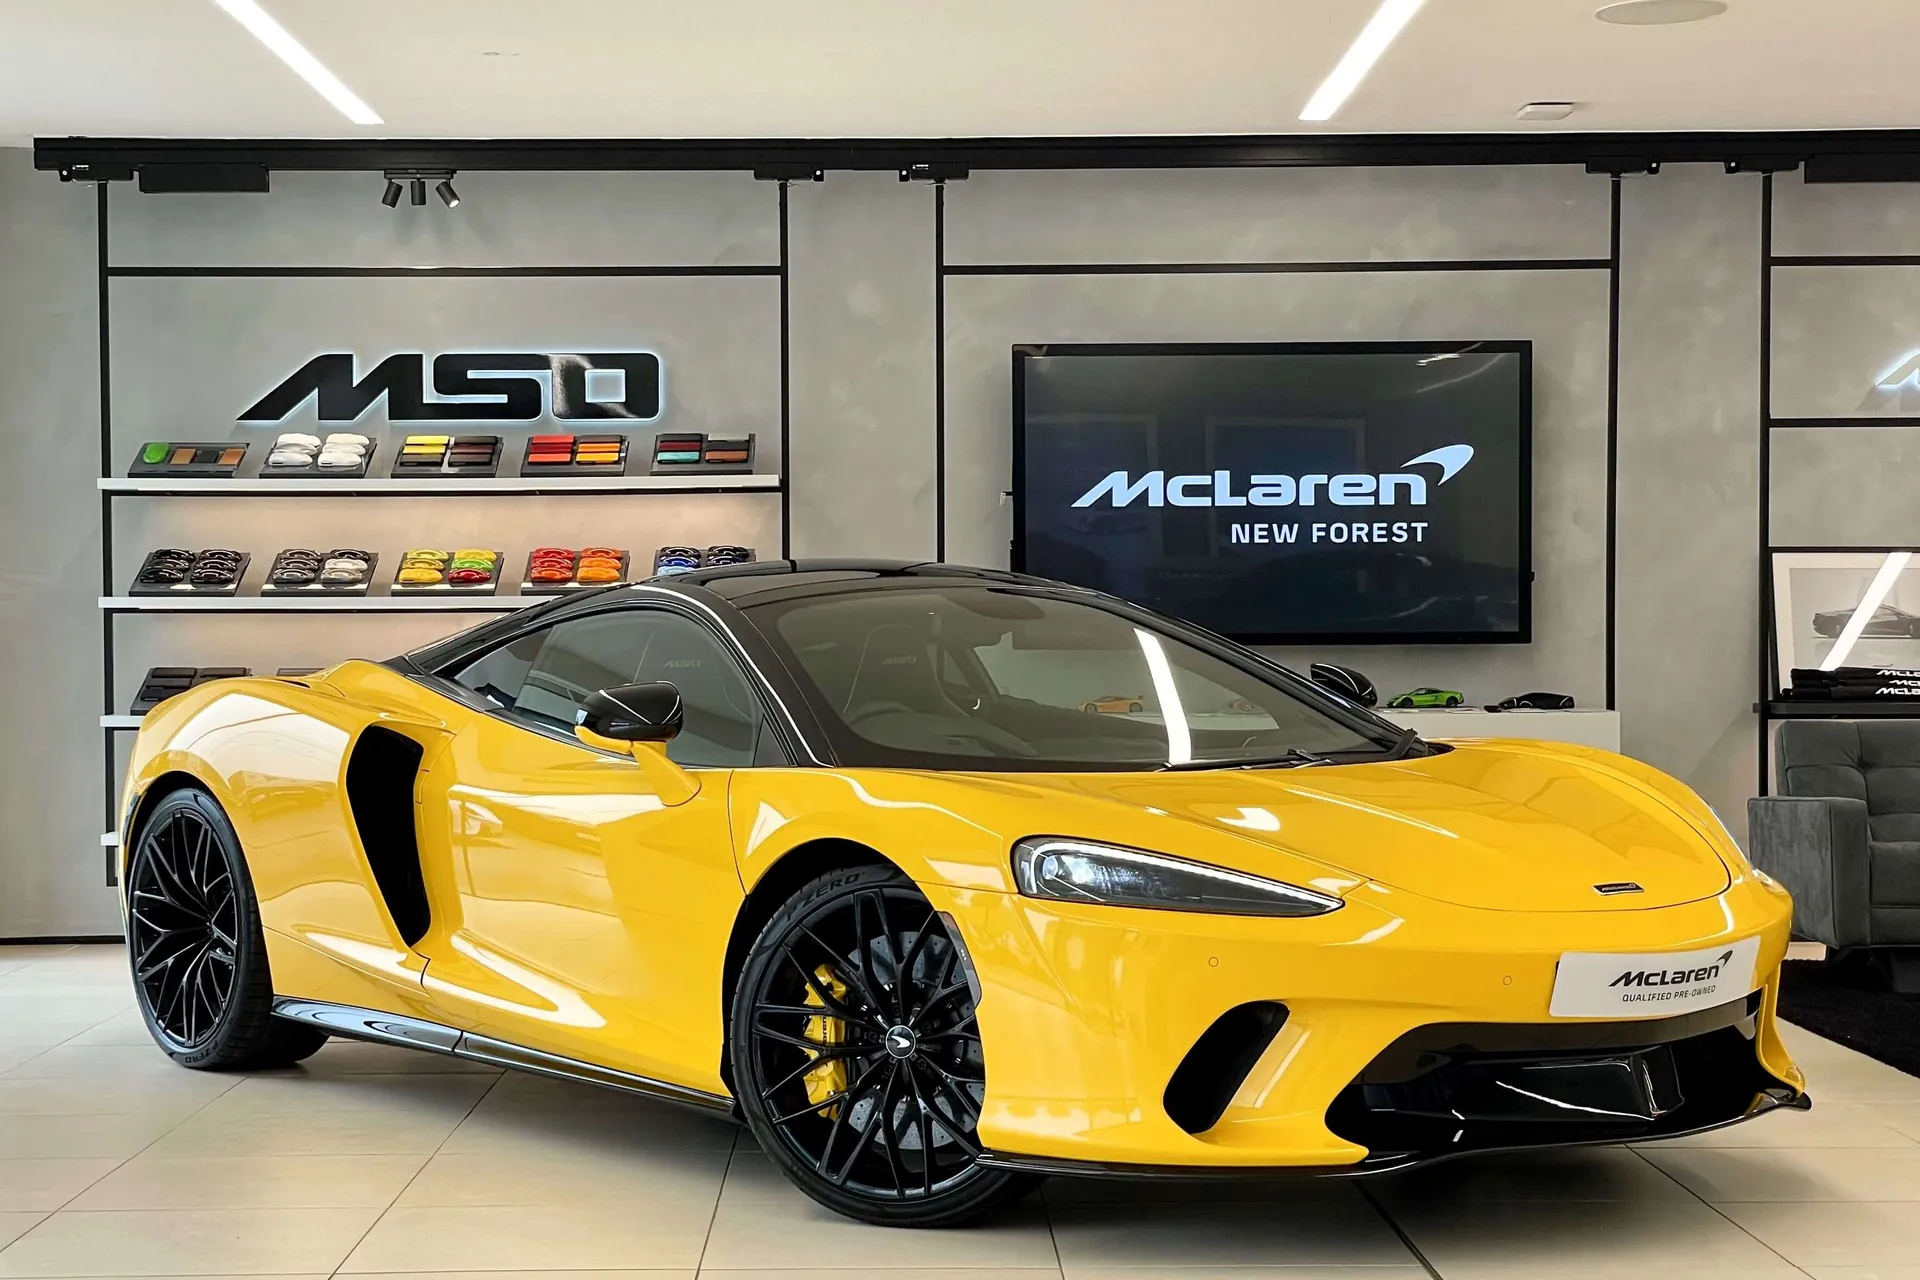 McLaren GT focused image